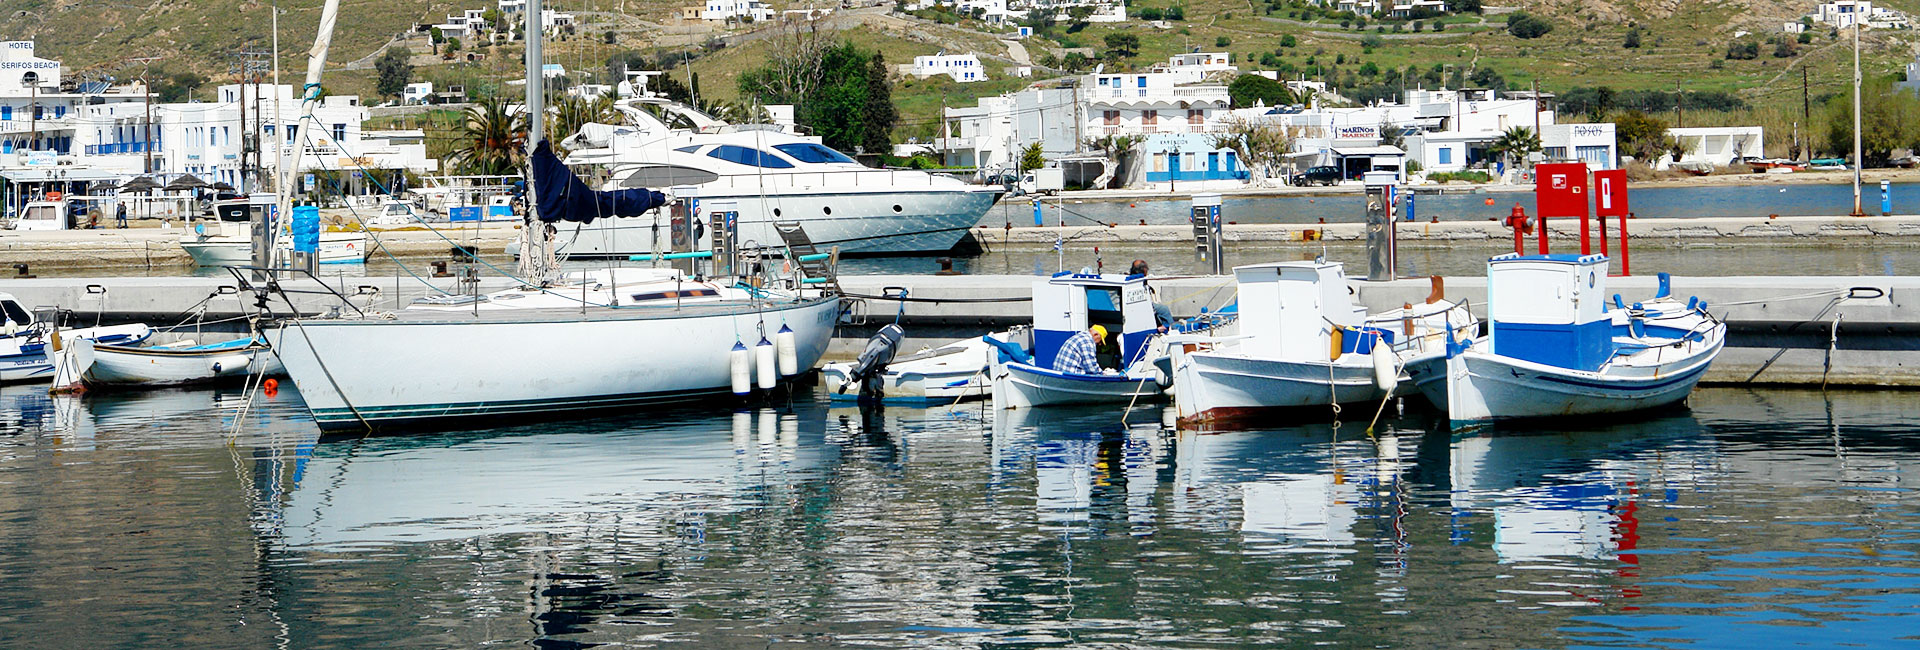 Livadi, the port of Serifos